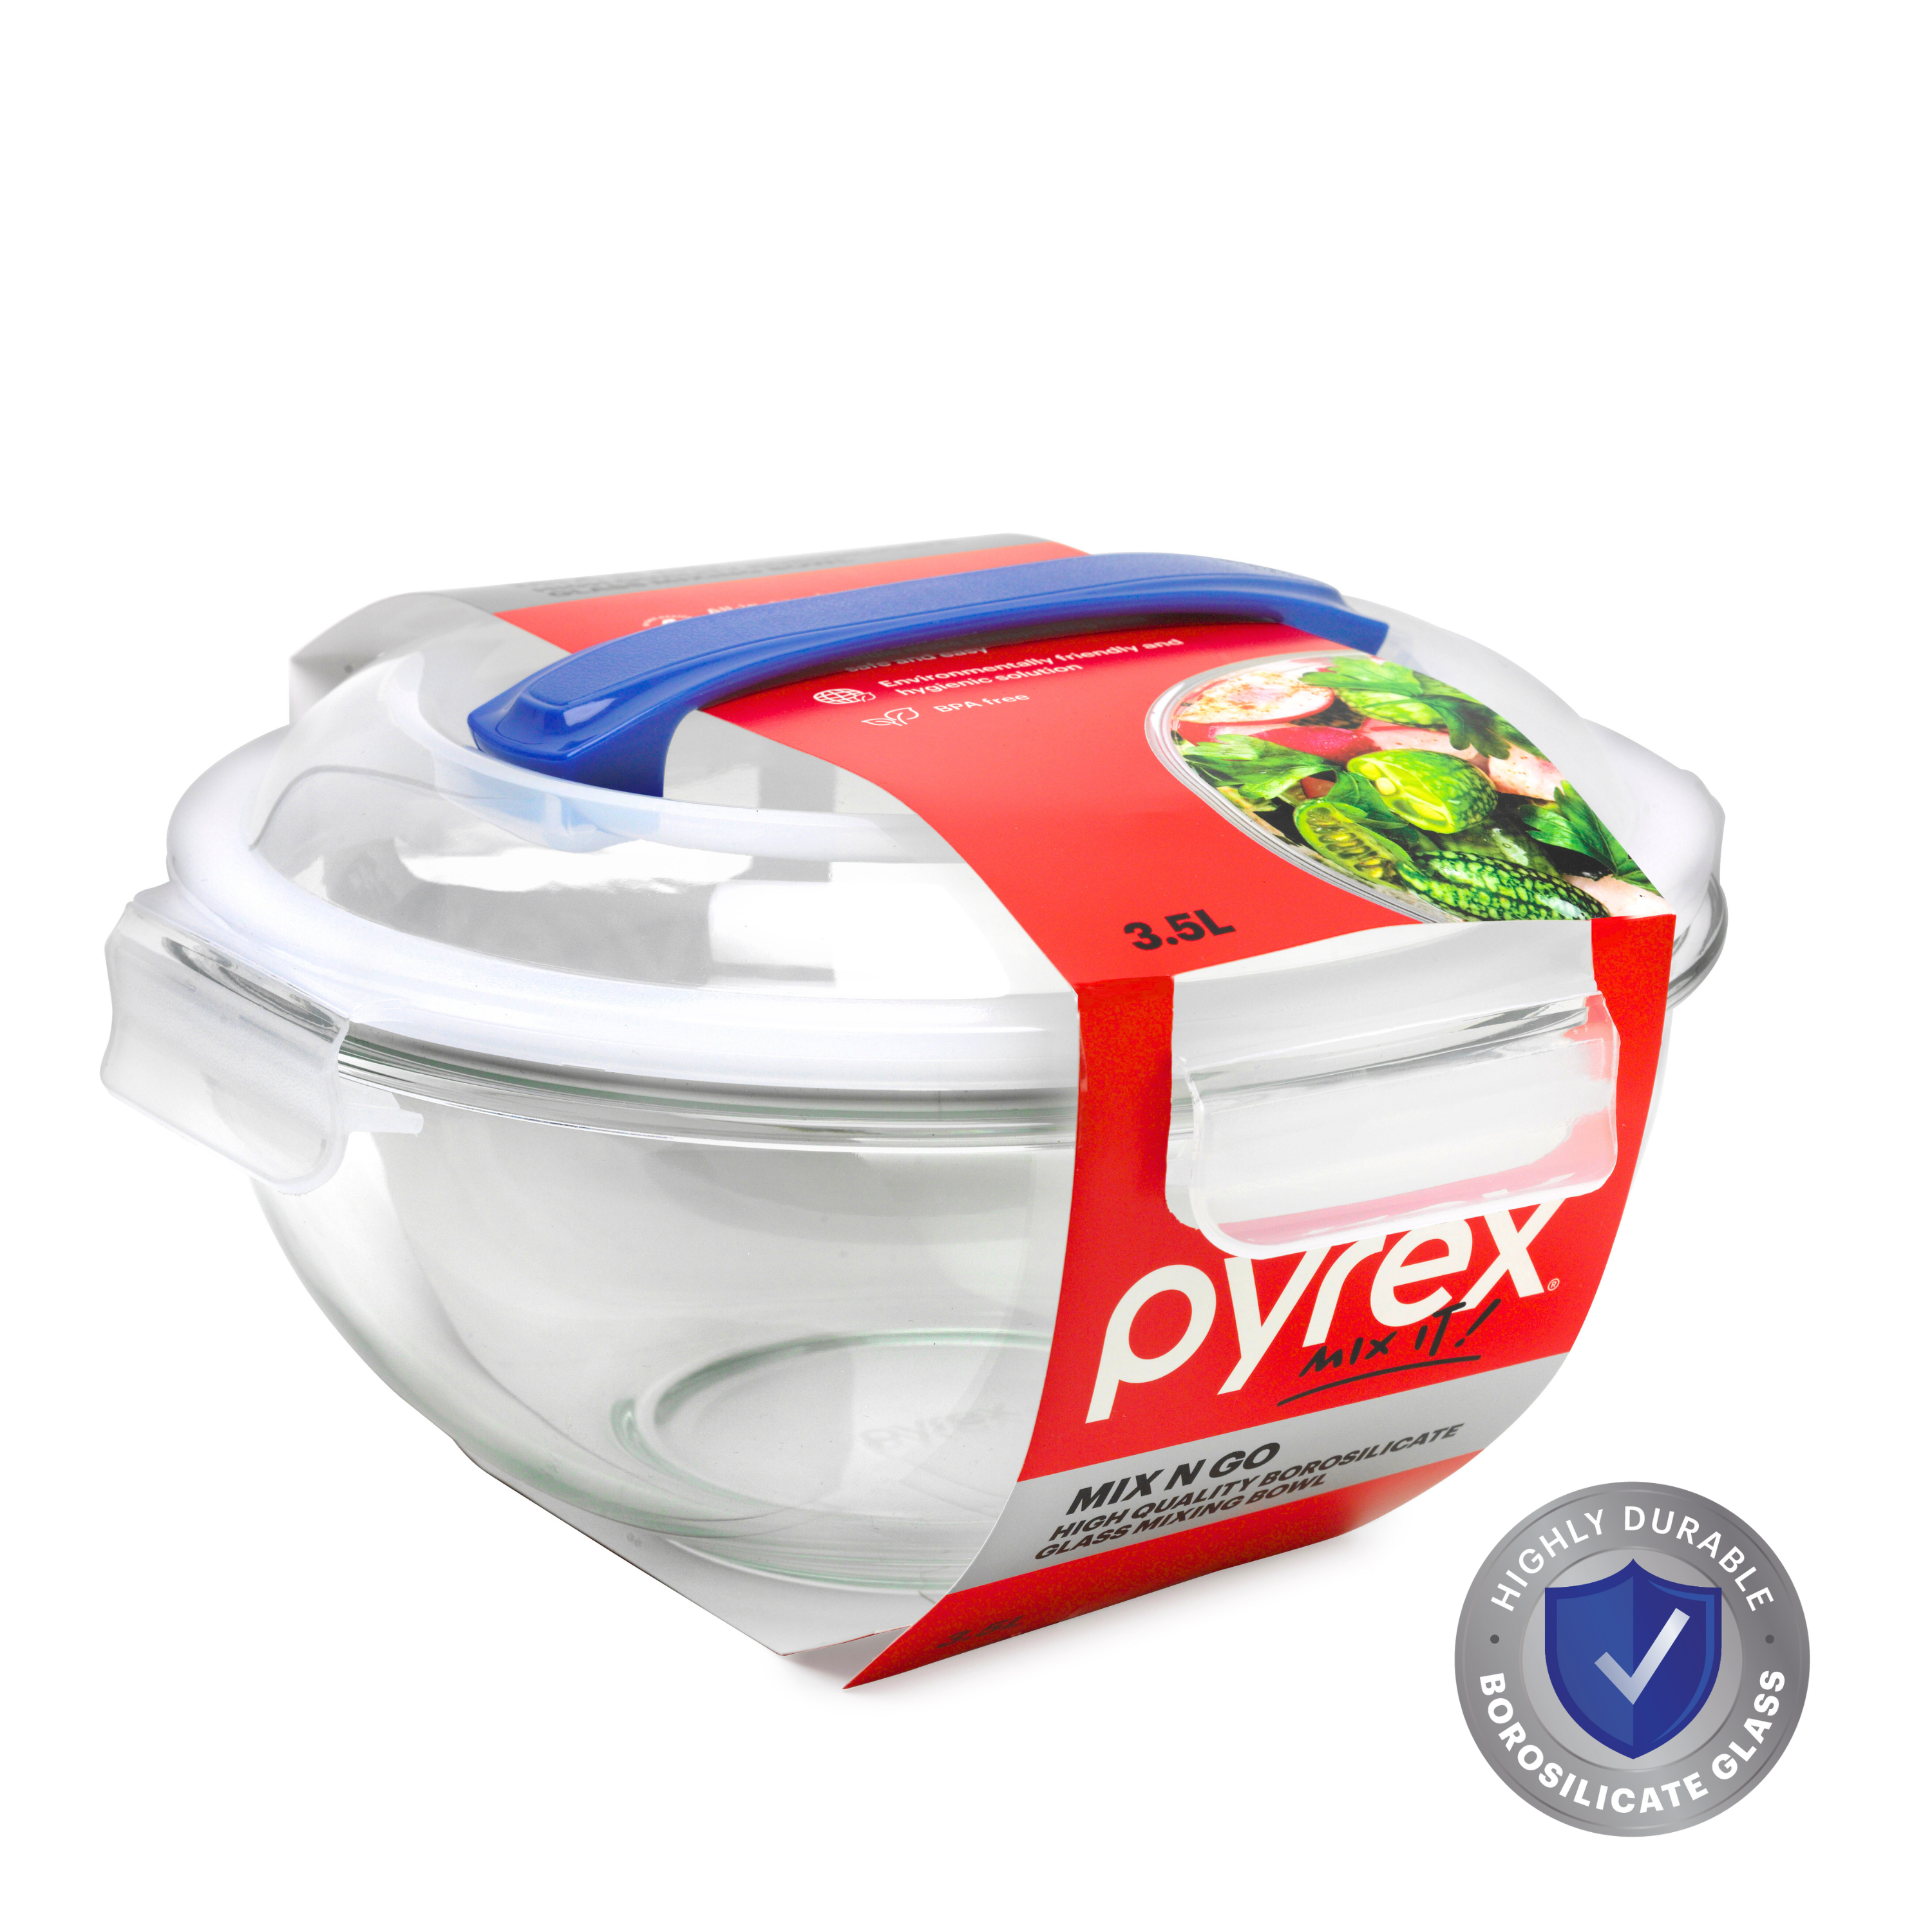 Pyrex® Mix N Go Salad Bowl 3.5L